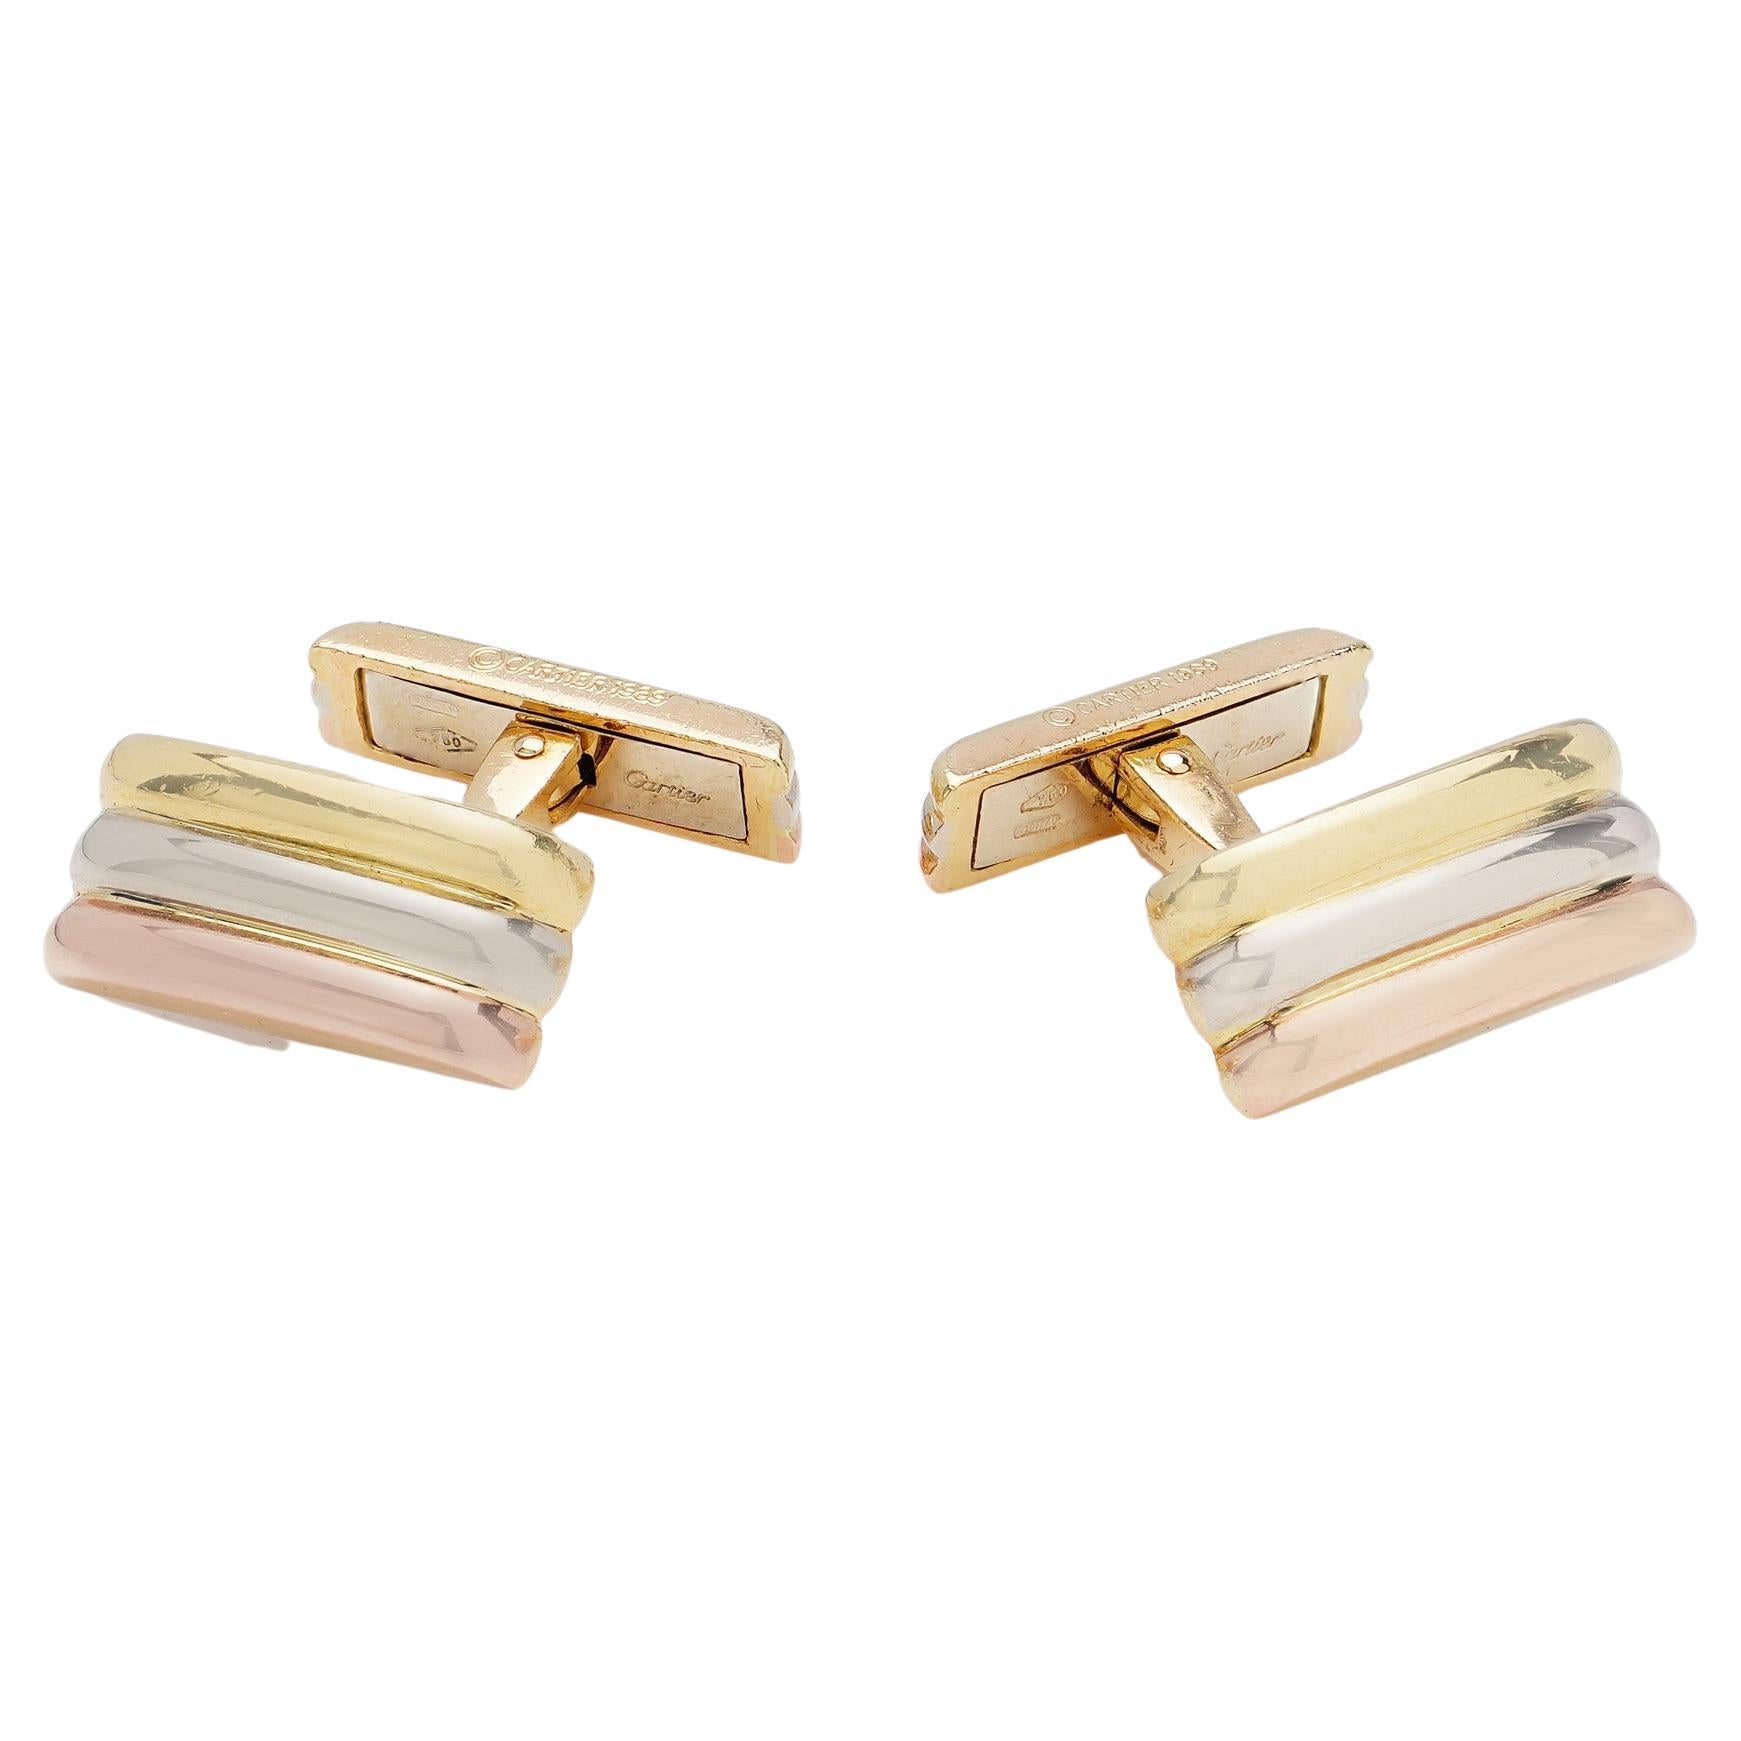 Cartier Trinity 18kt Gold Cufflinks in Original Box